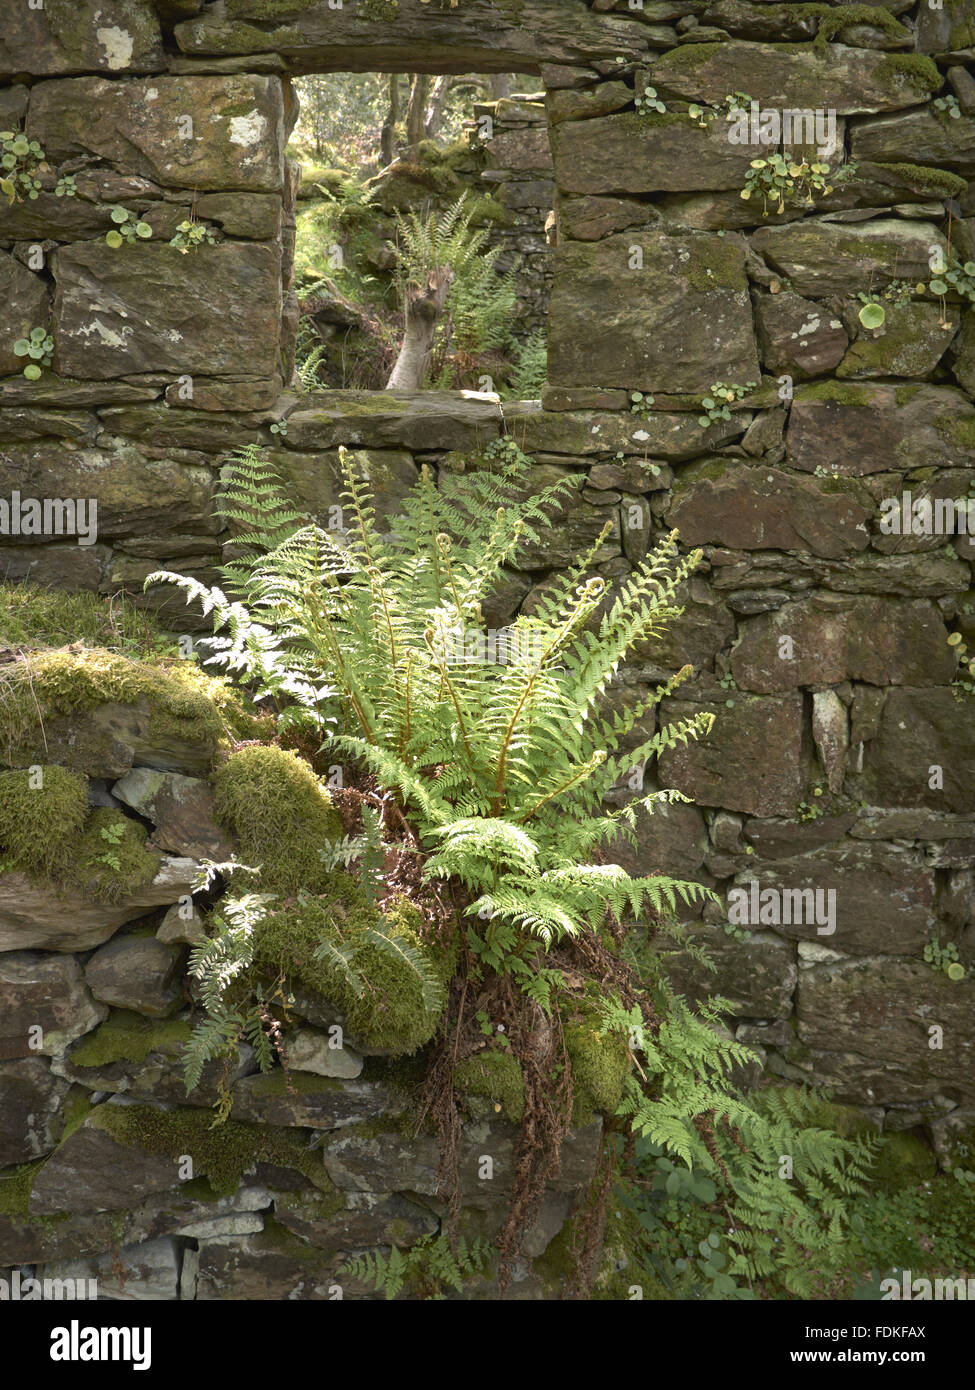 Ferns growing on a ruined building on Llyndy Isaf, an estate of 600 acres in Snowdonia, in the Nant Gwynant valley near Beddgelert, Gwynedd, Wales. Stock Photo